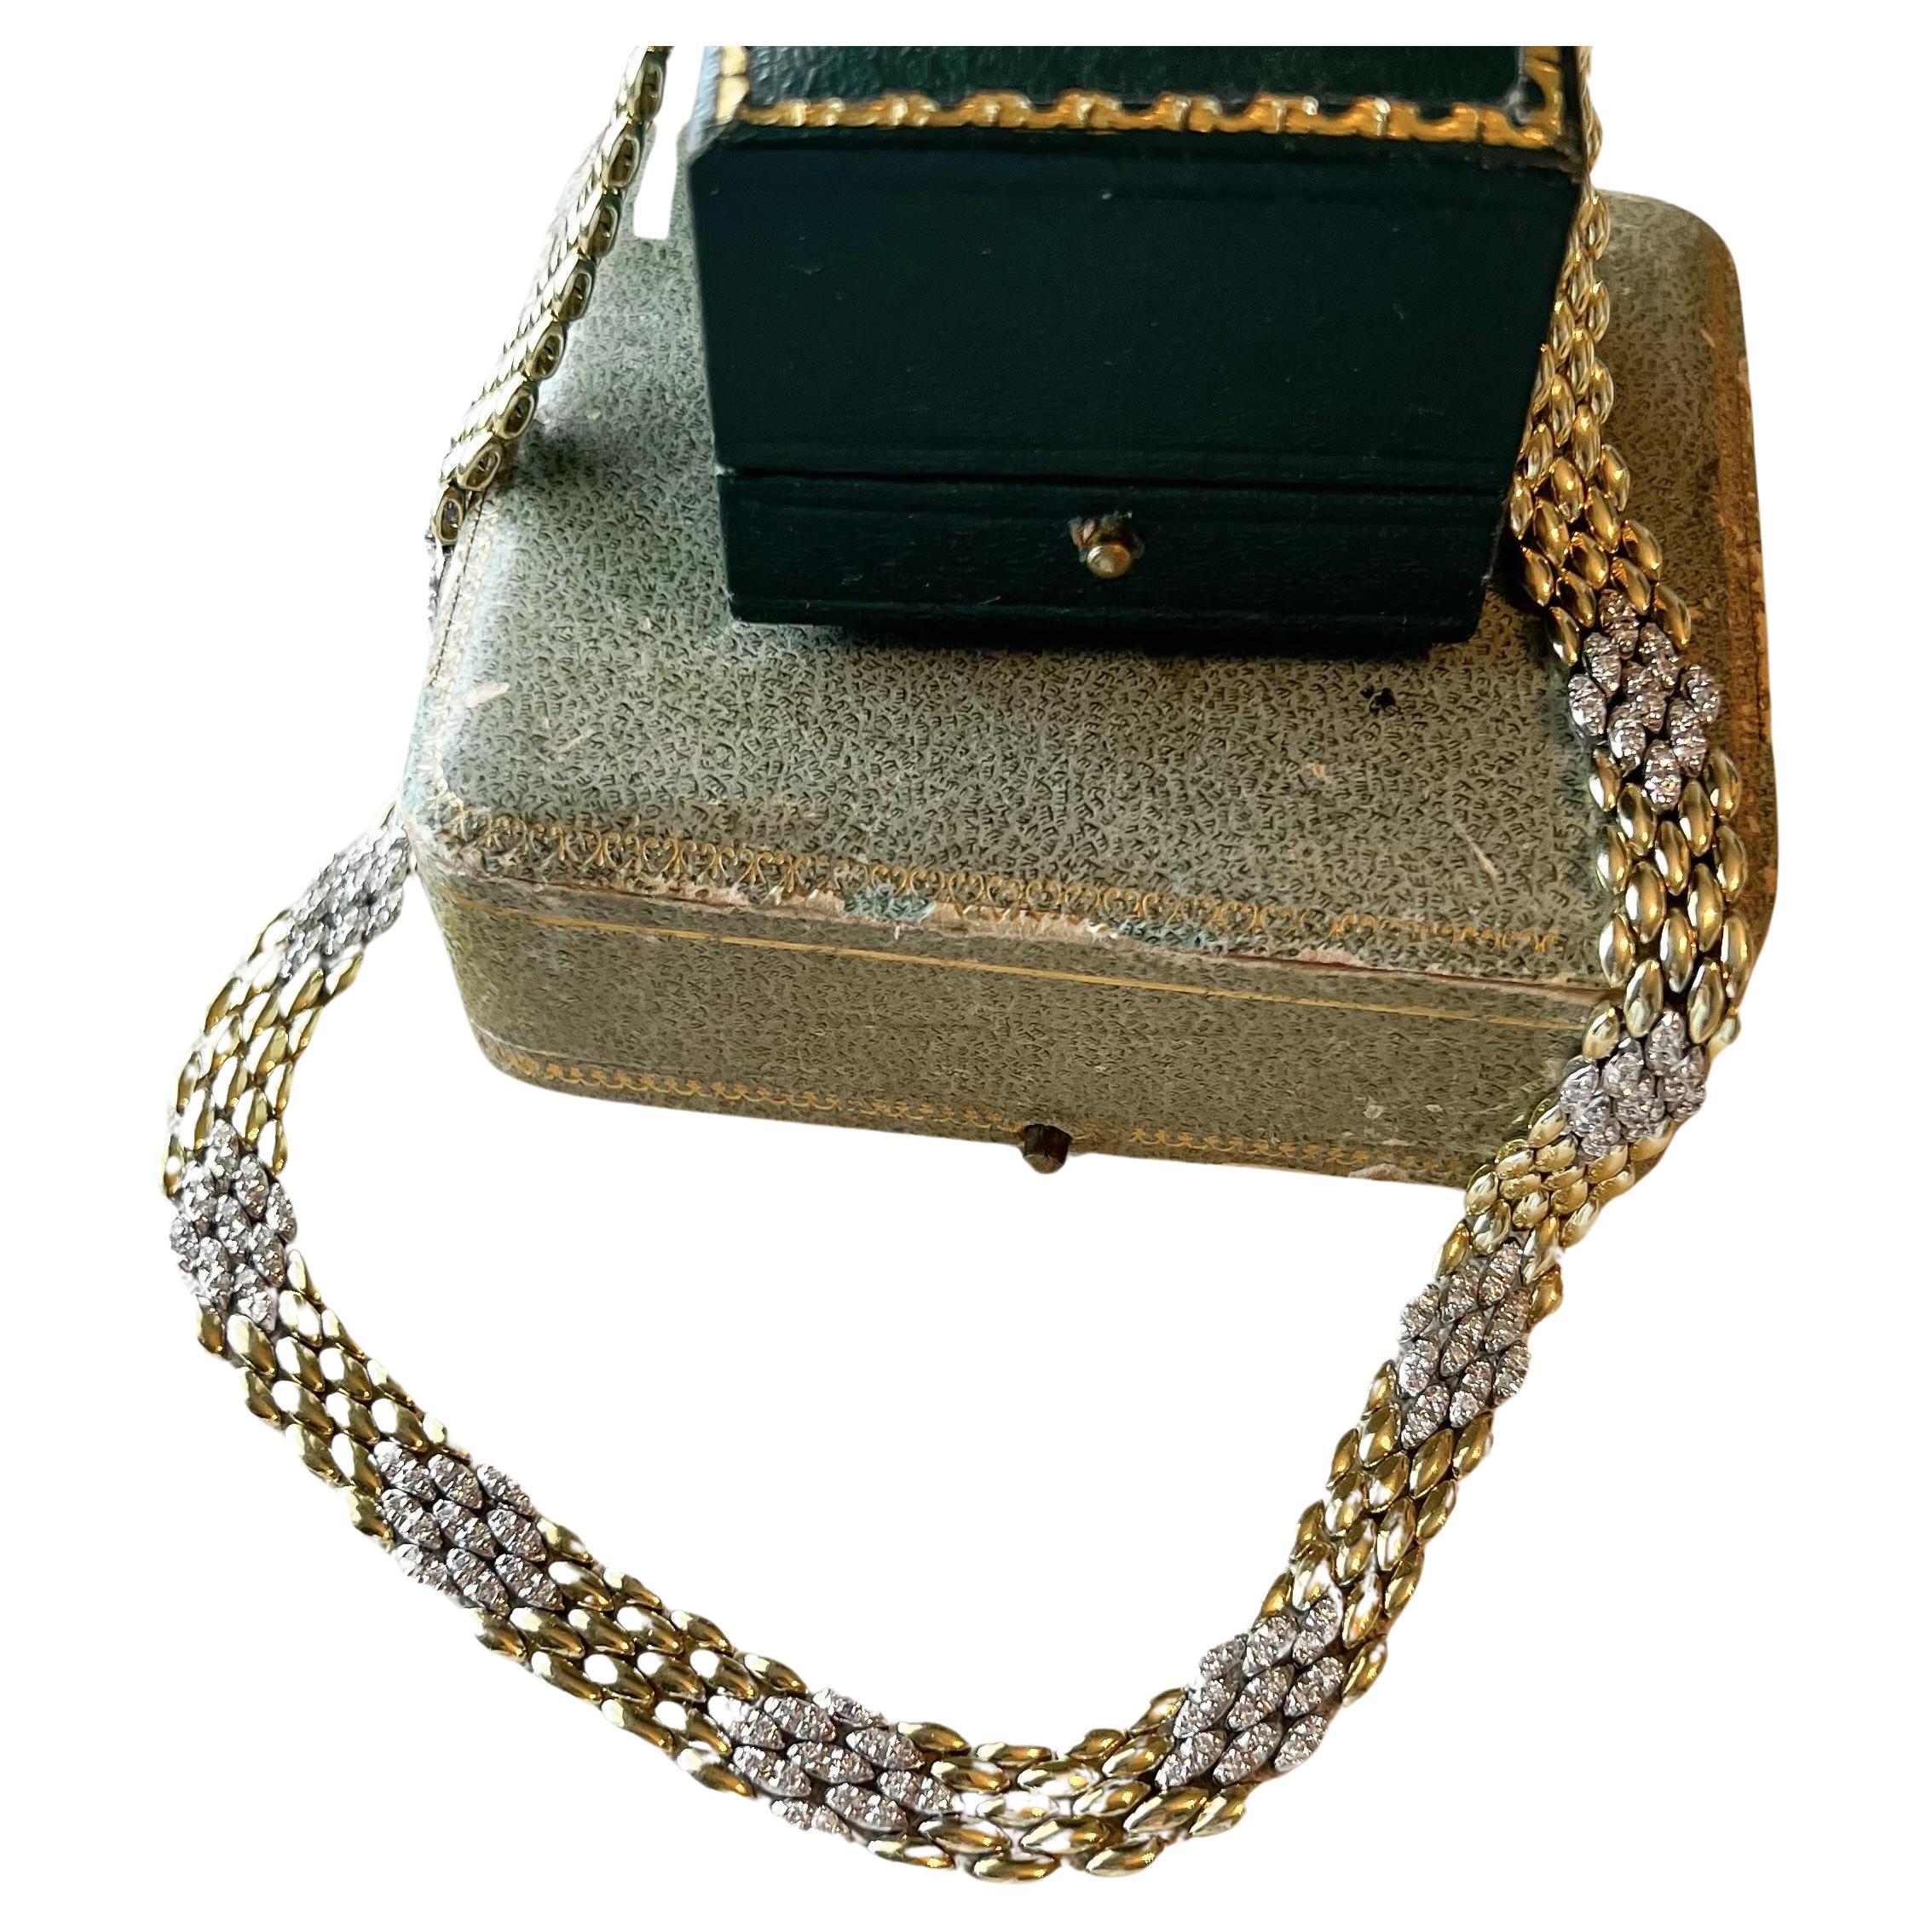 Contemporary Estate 18k Gold Diamond Link Necklace